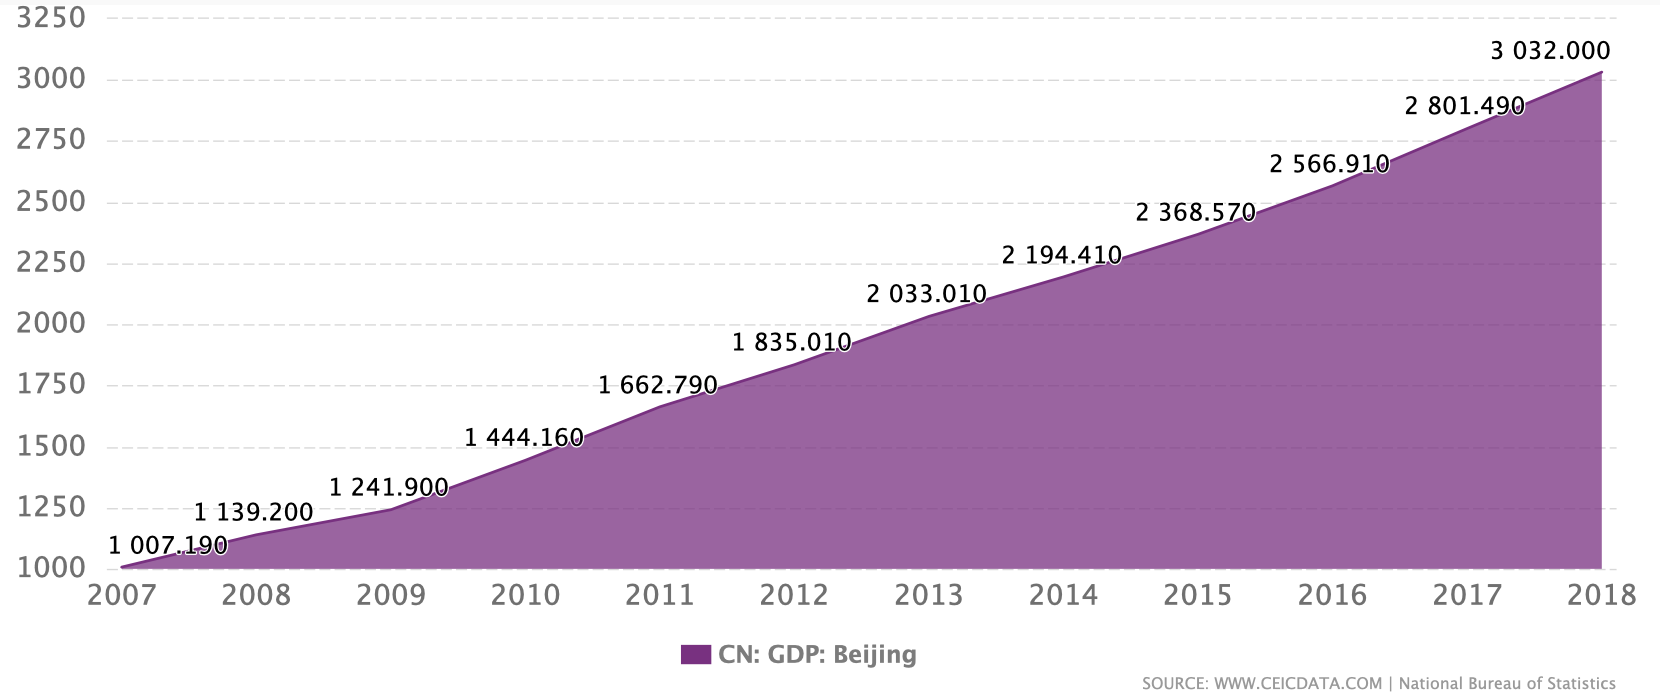 The GDP of Beijing